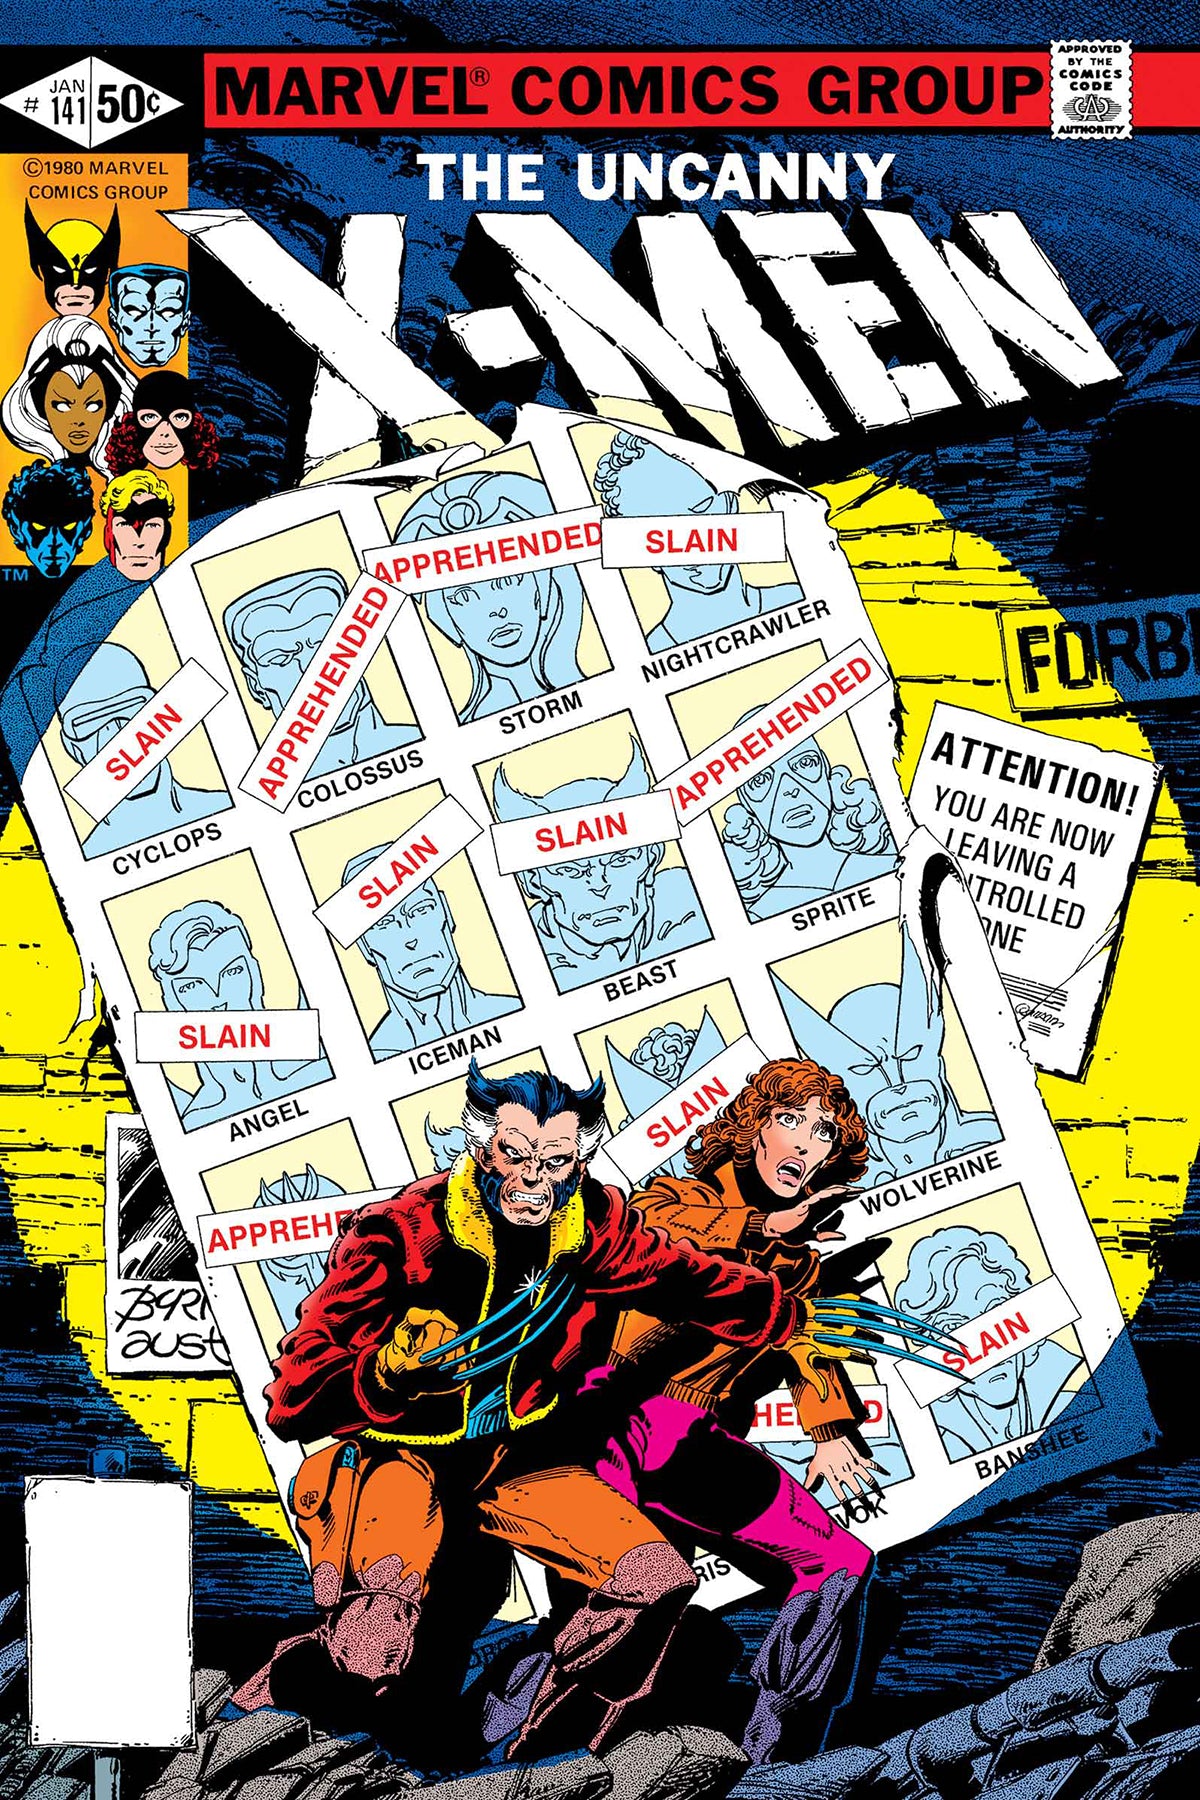 TRUE BELIEVERS X-MEN PYRO #1 | L.A. Mood Comics and Games